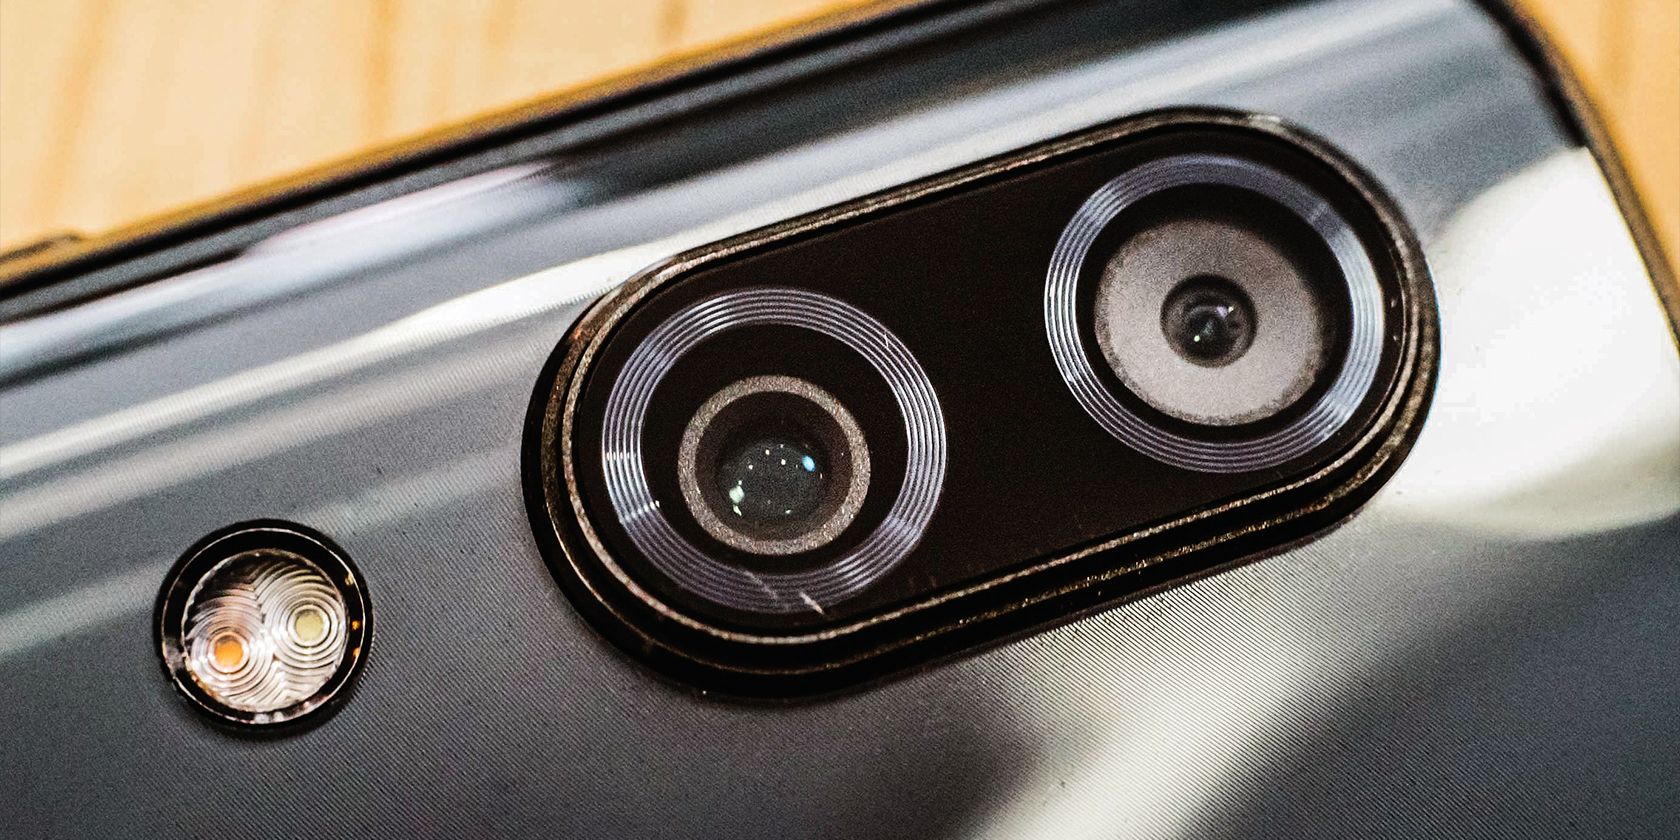 rear smartphone camera lens